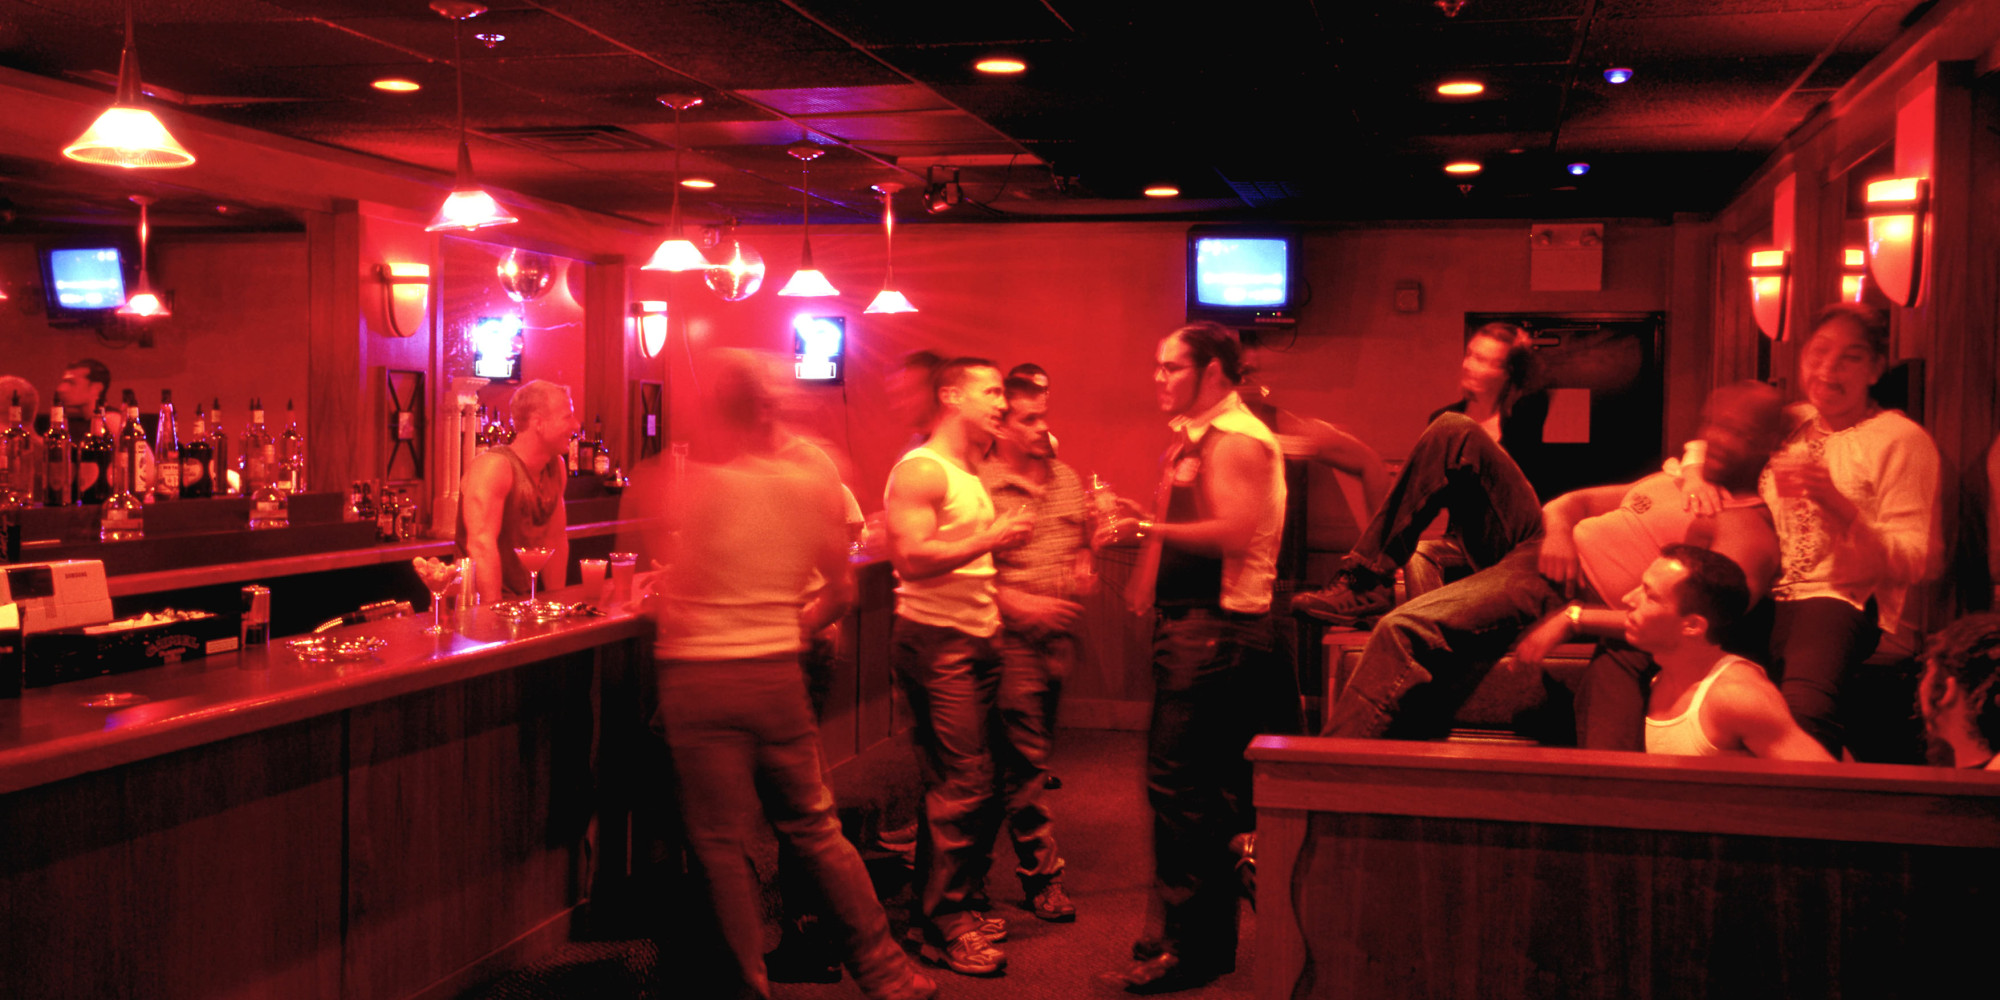 houston gay bars for older crowd